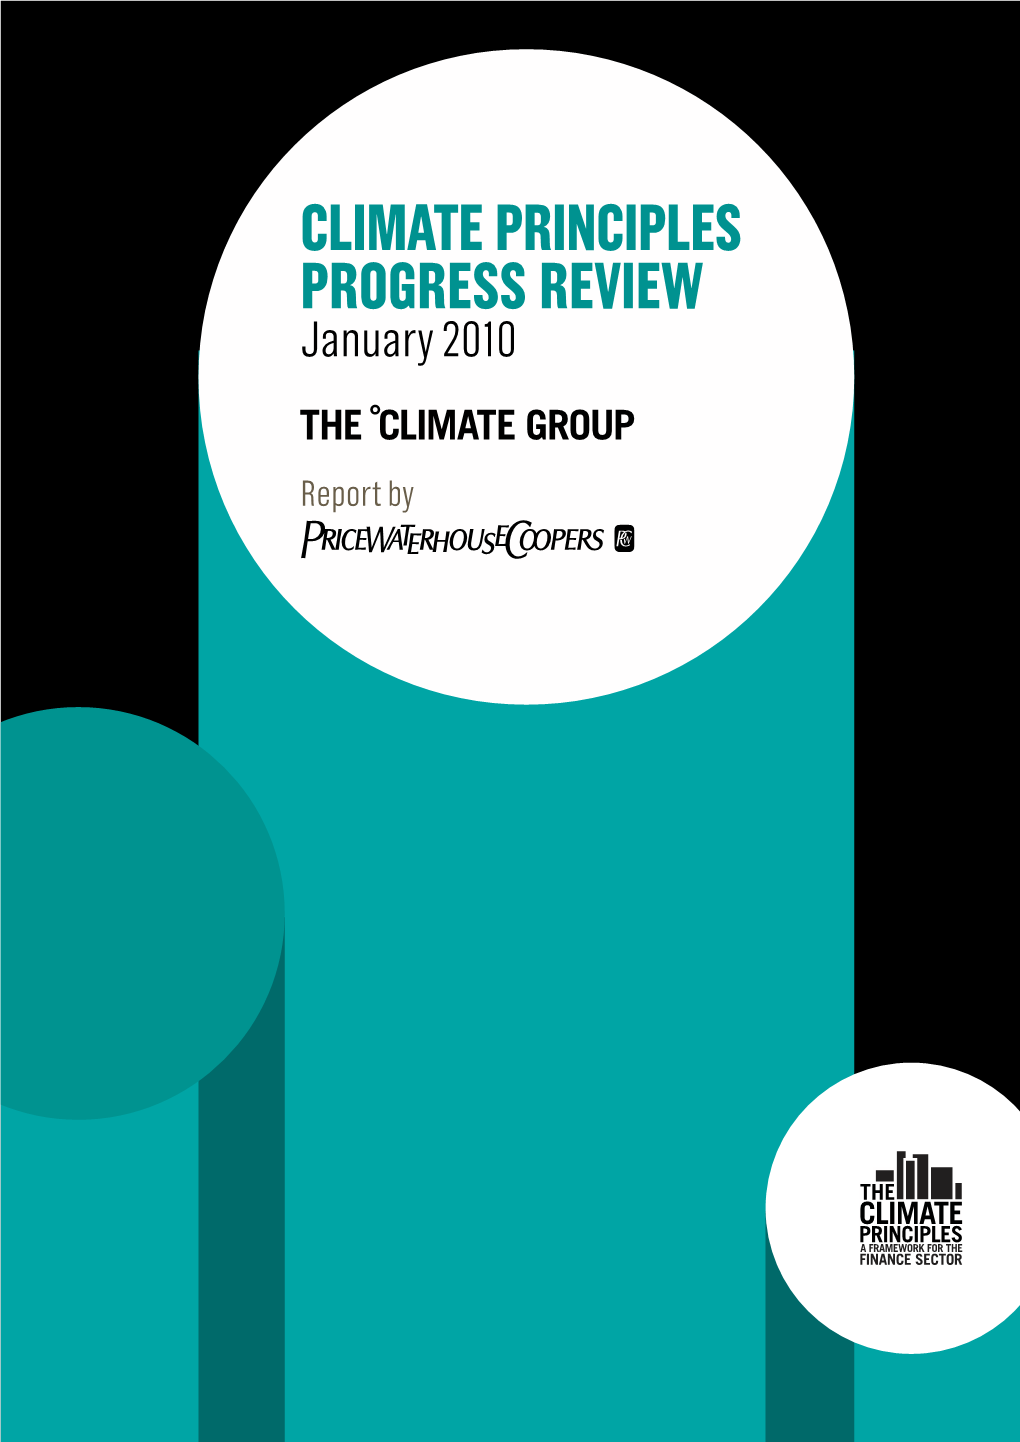 The Climate Principles Progress Review